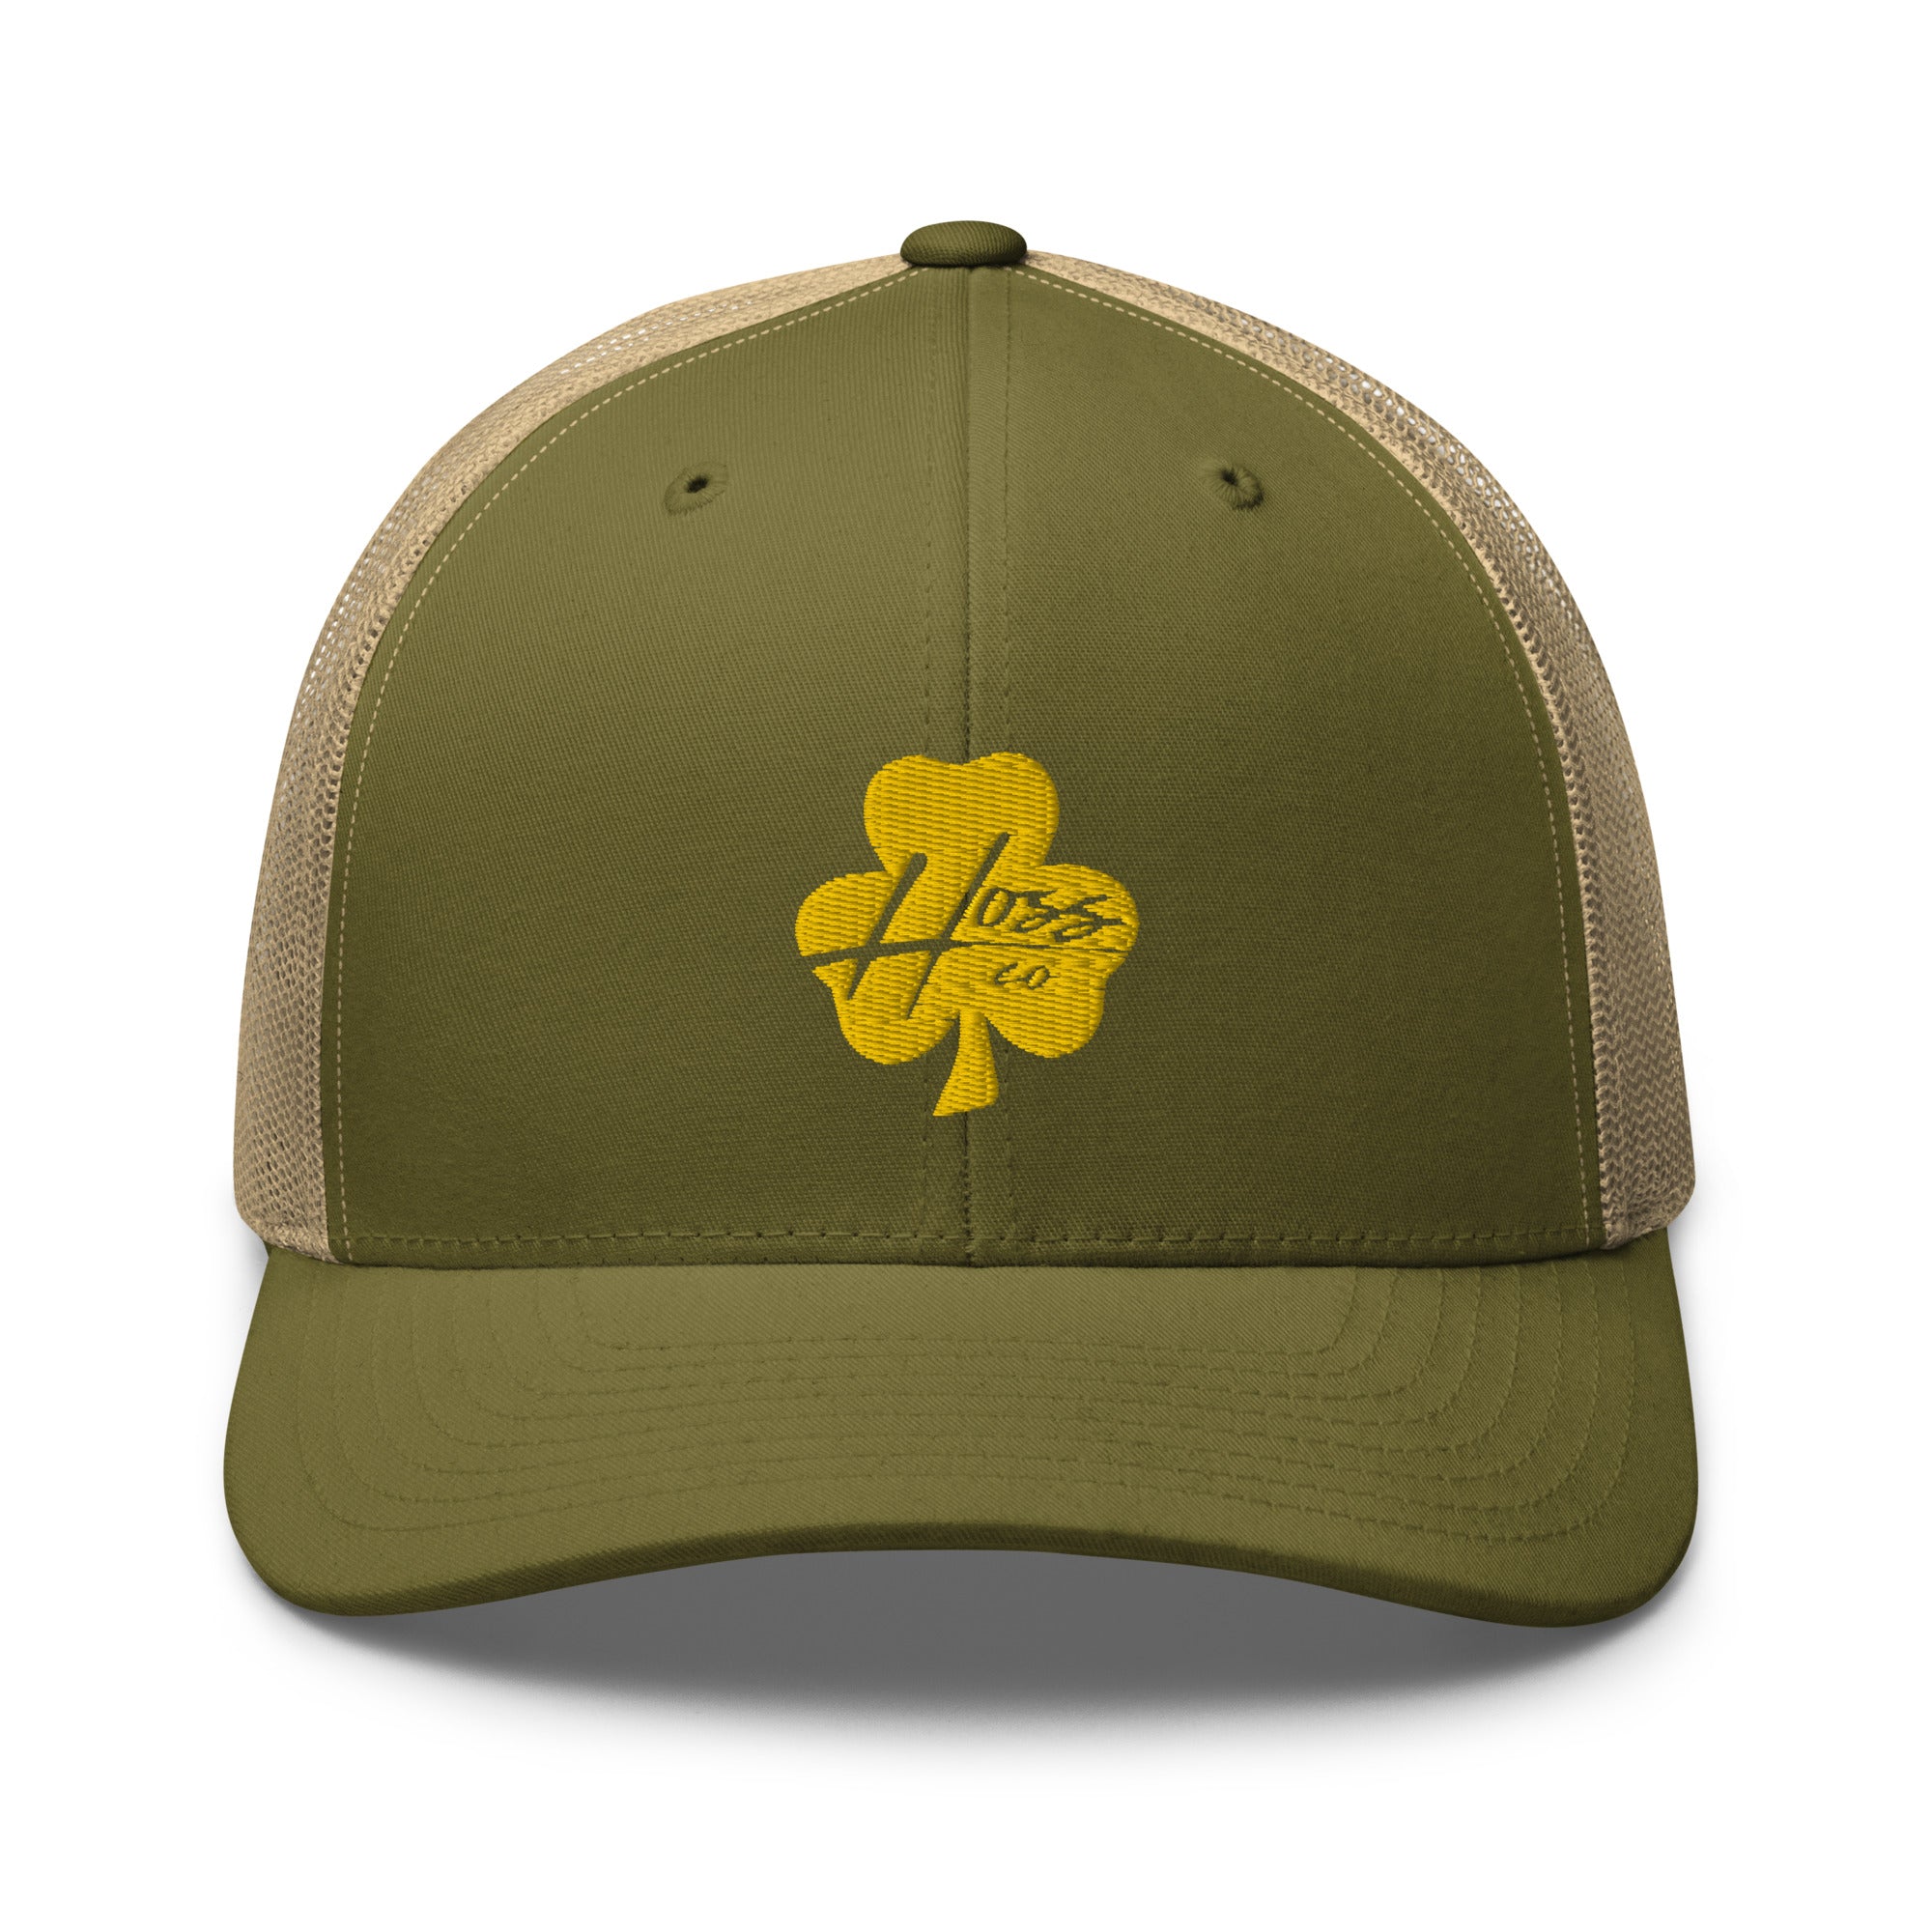 Hoss Shamrock Trucker Hat (Limited Edition)